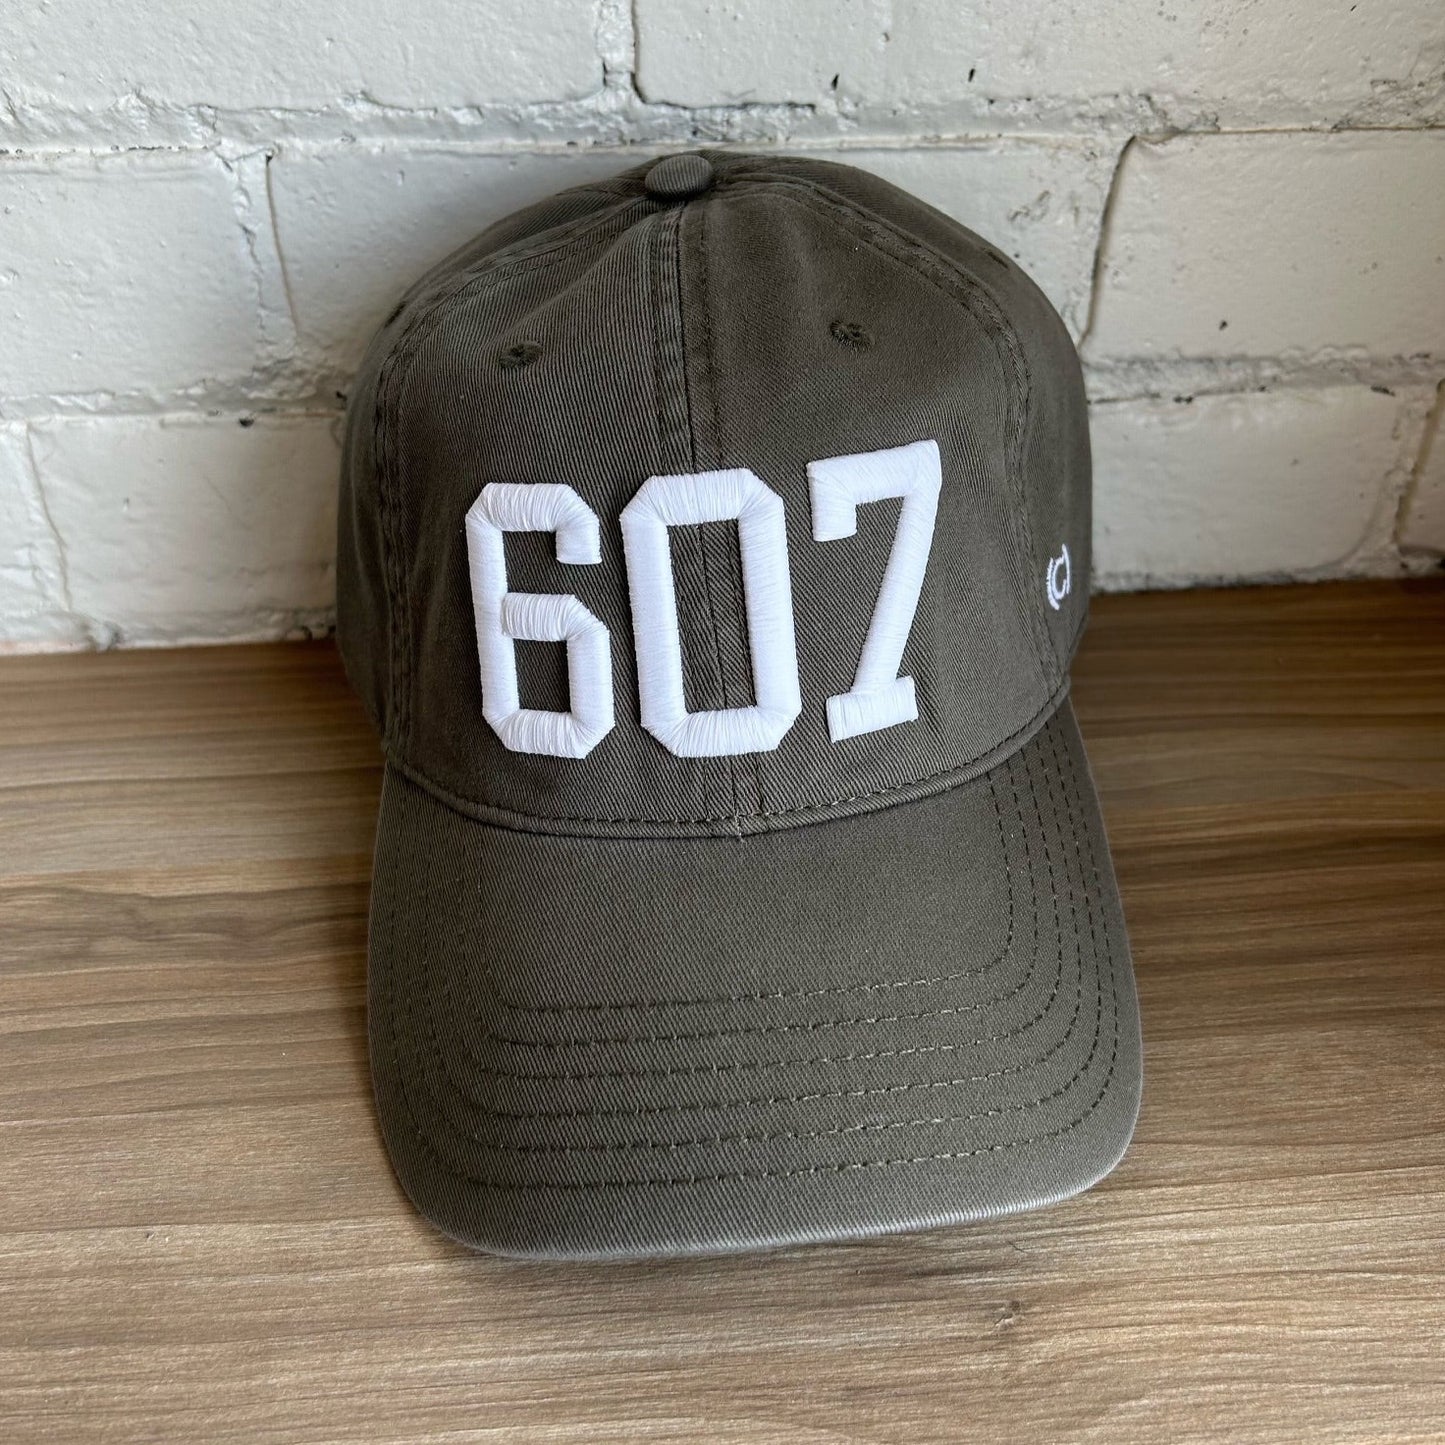 607 Hat - Olive w/White